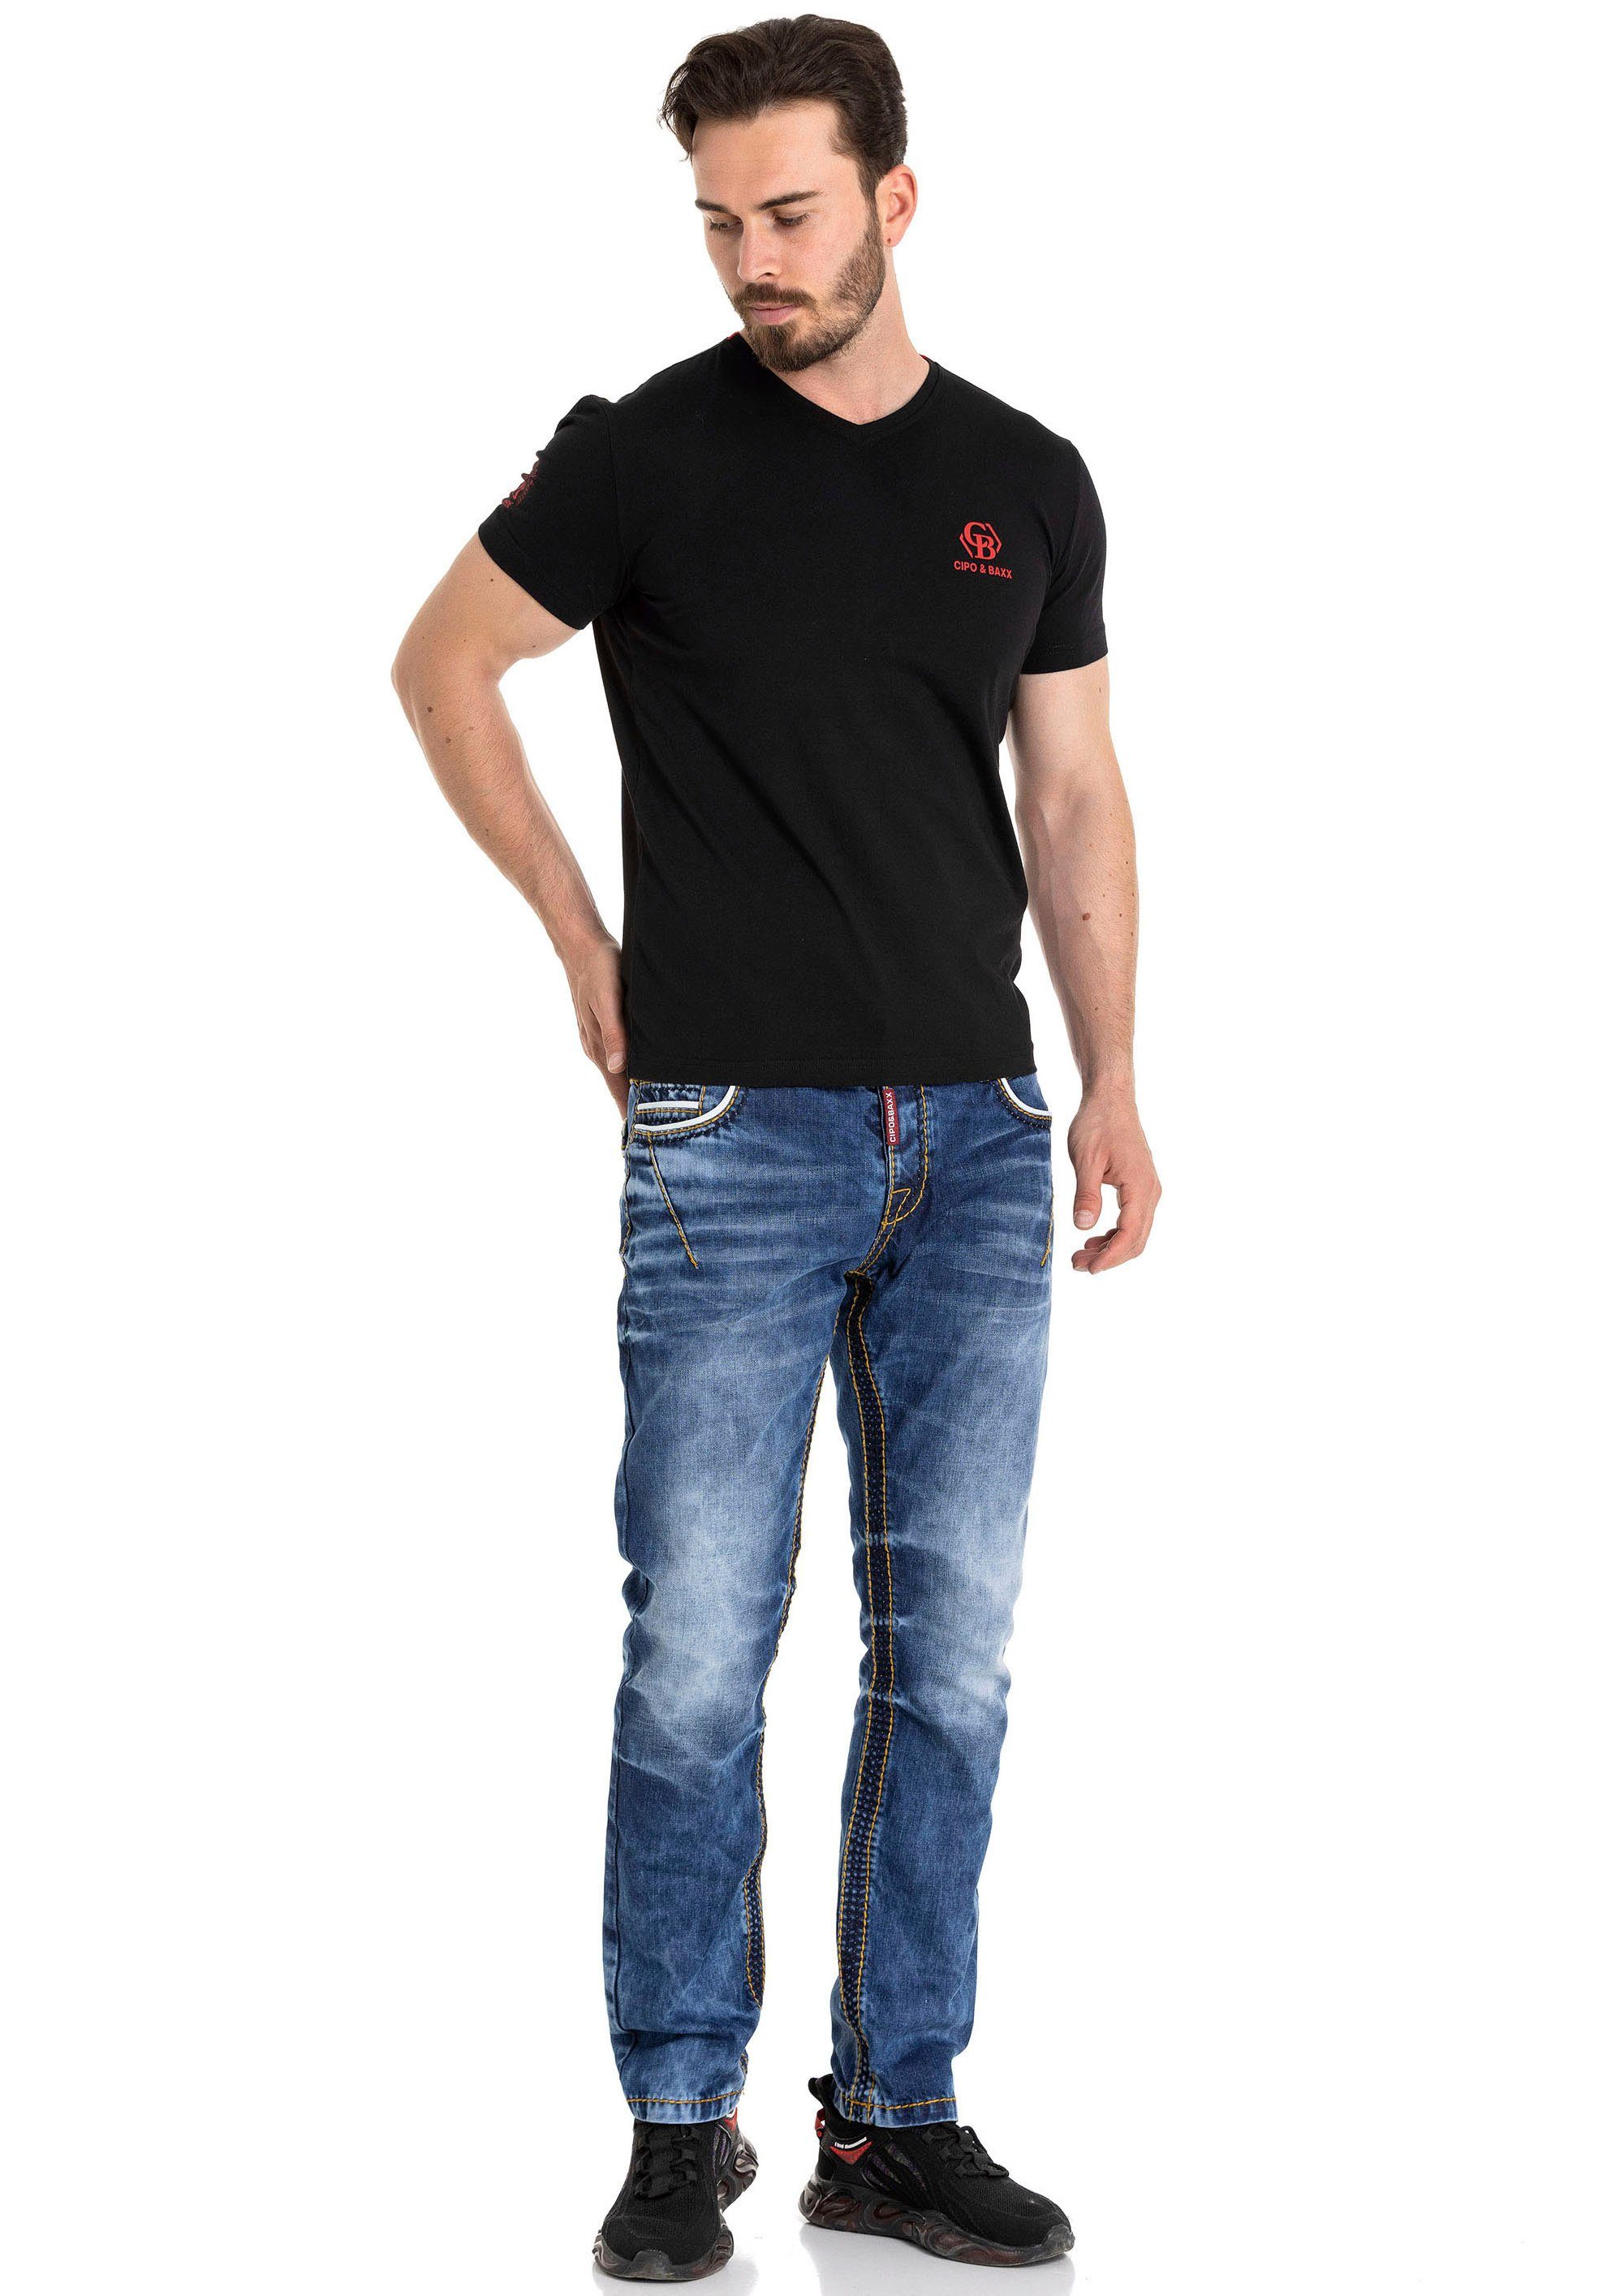 Cipo & Baxx V-Shirt Samt-Optik mit in black Markenlabel